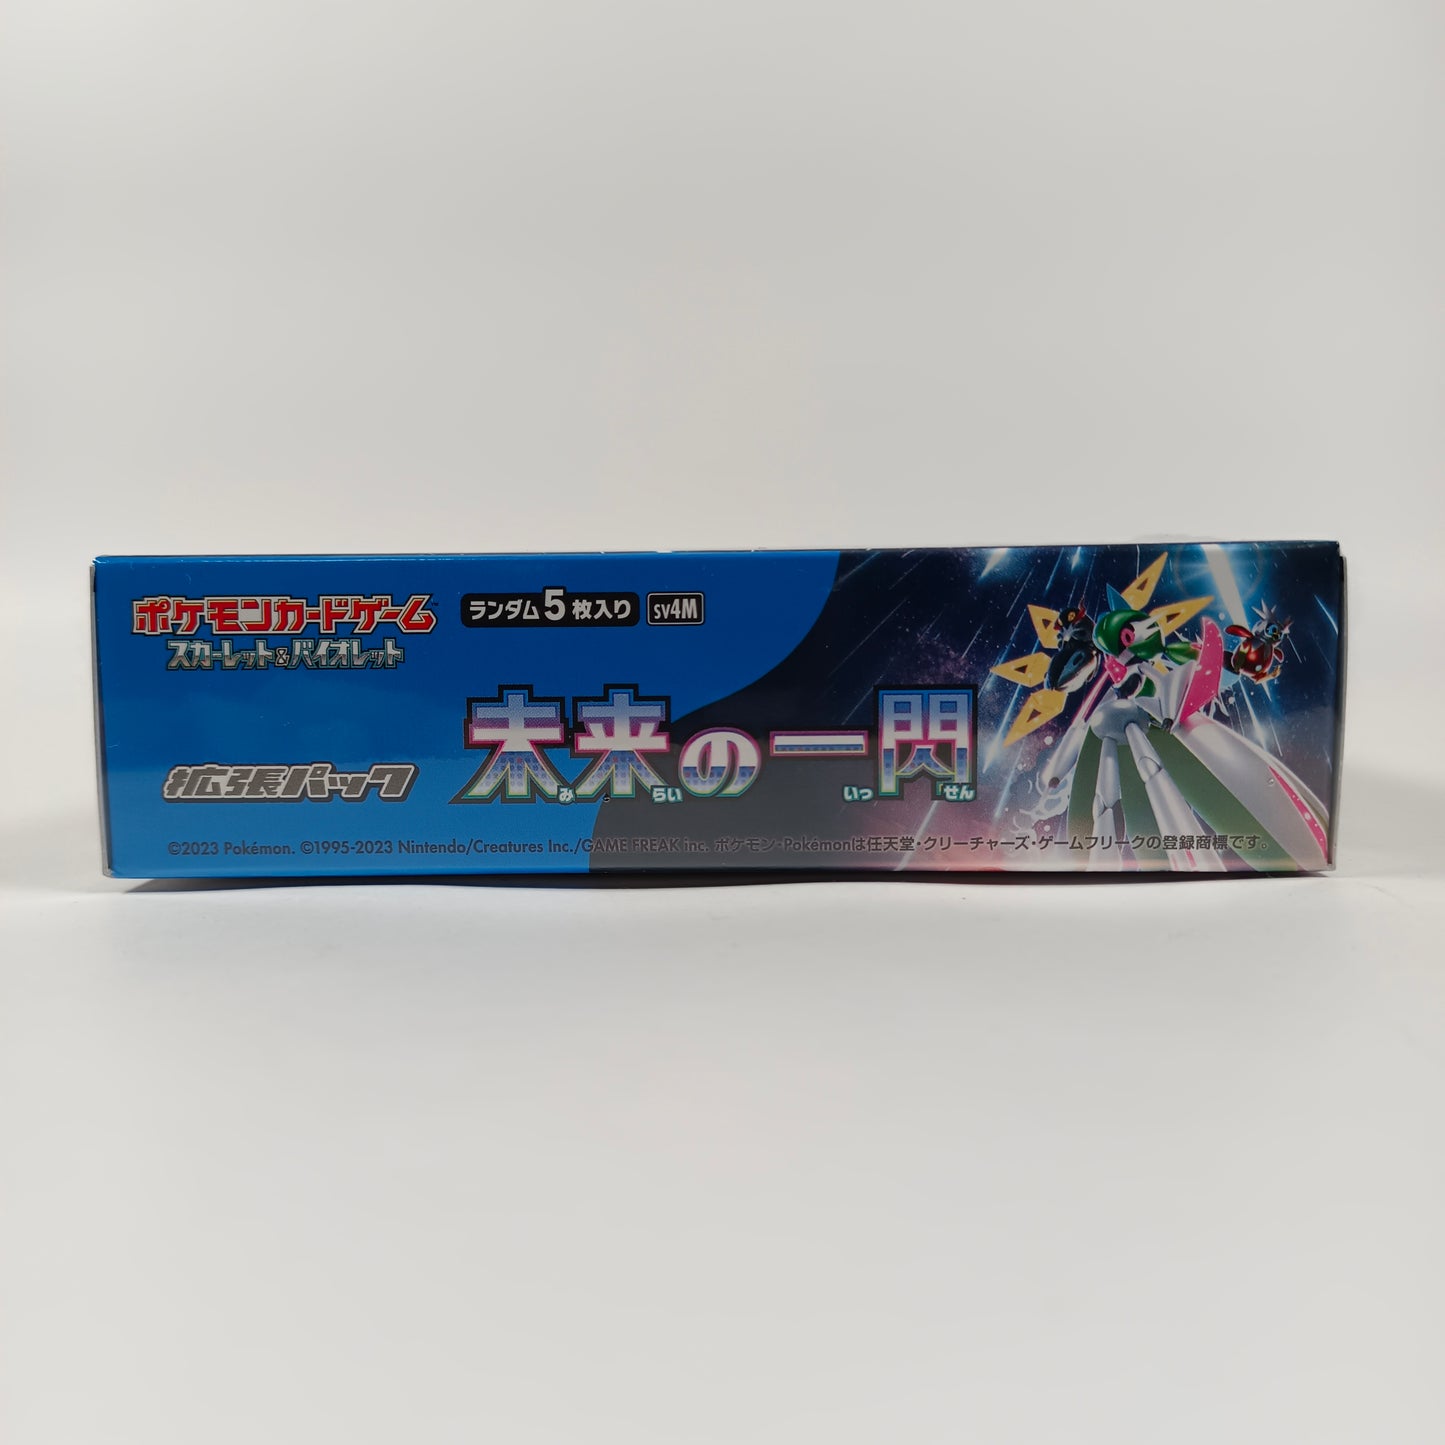 POKEMON CARD GAME FUTURE FLASH sv4M BOX